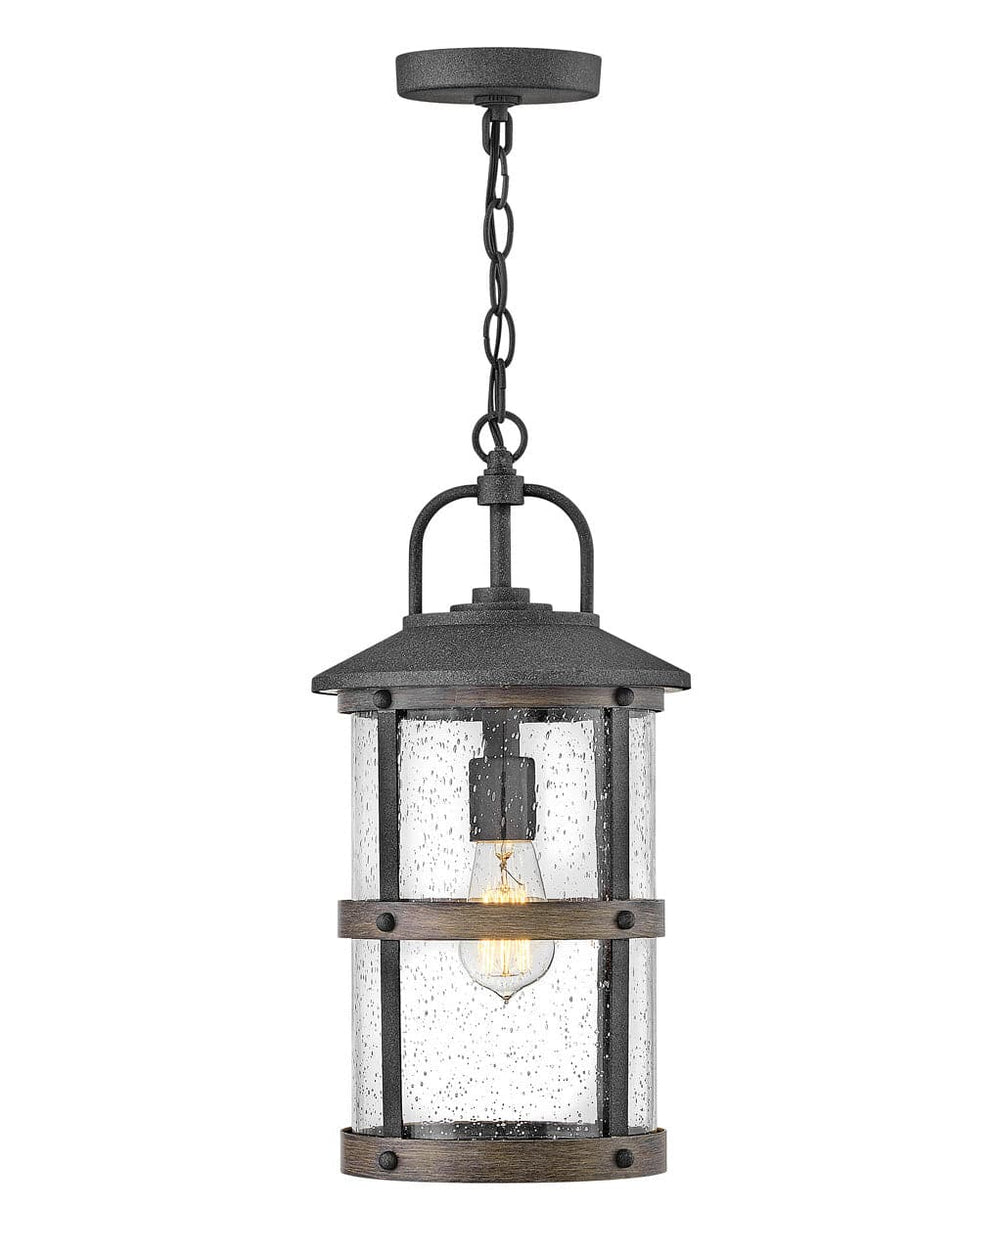 Outdoor Lakehouse - Medium Hanging Lantern-Hinkley Lighting-HINKLEY-2682DZ-LL-Outdoor Post LanternsAged Zinc-120V-2-France and Son